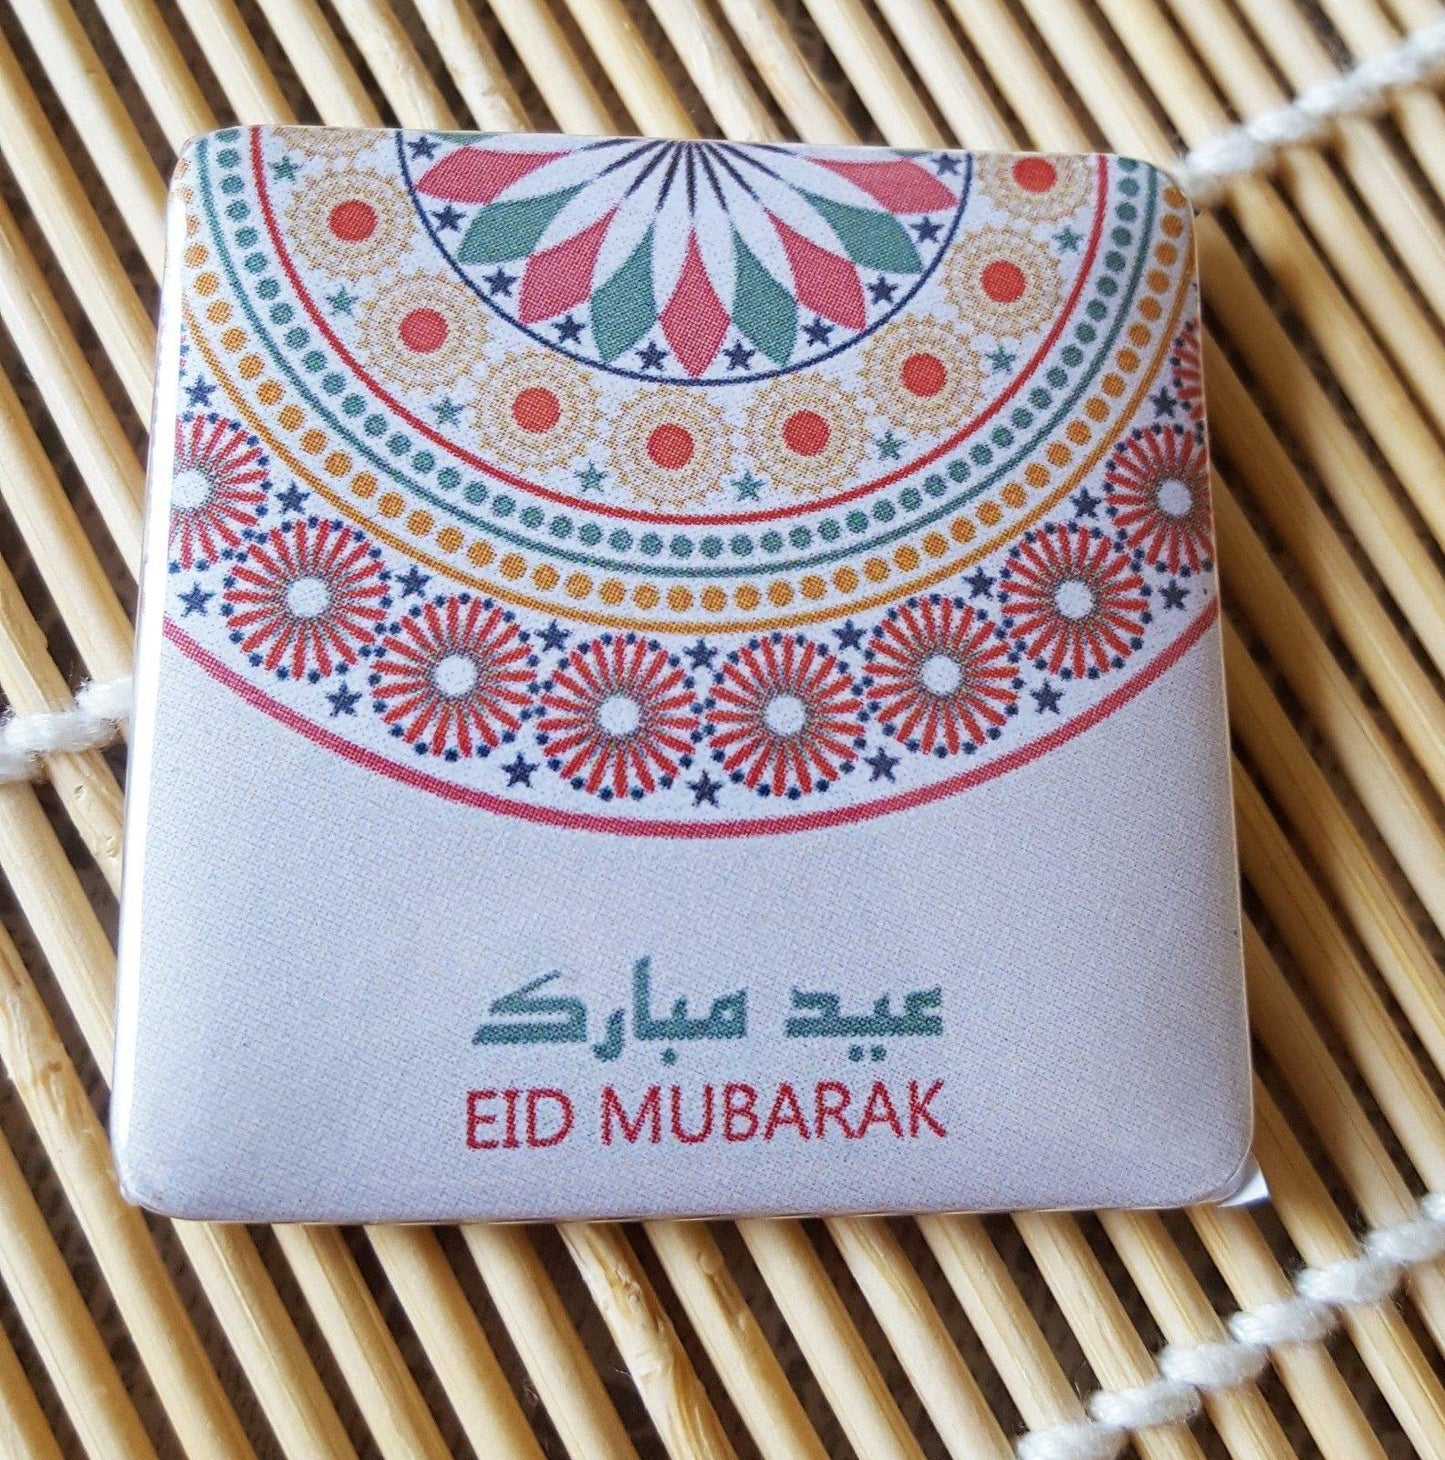 Muslim BADGE BUTTON PIN "Eid Mubarak" (Big Size 2.25inch/58mm) ISLAMIC GIFT - Arabian Shopping Zone